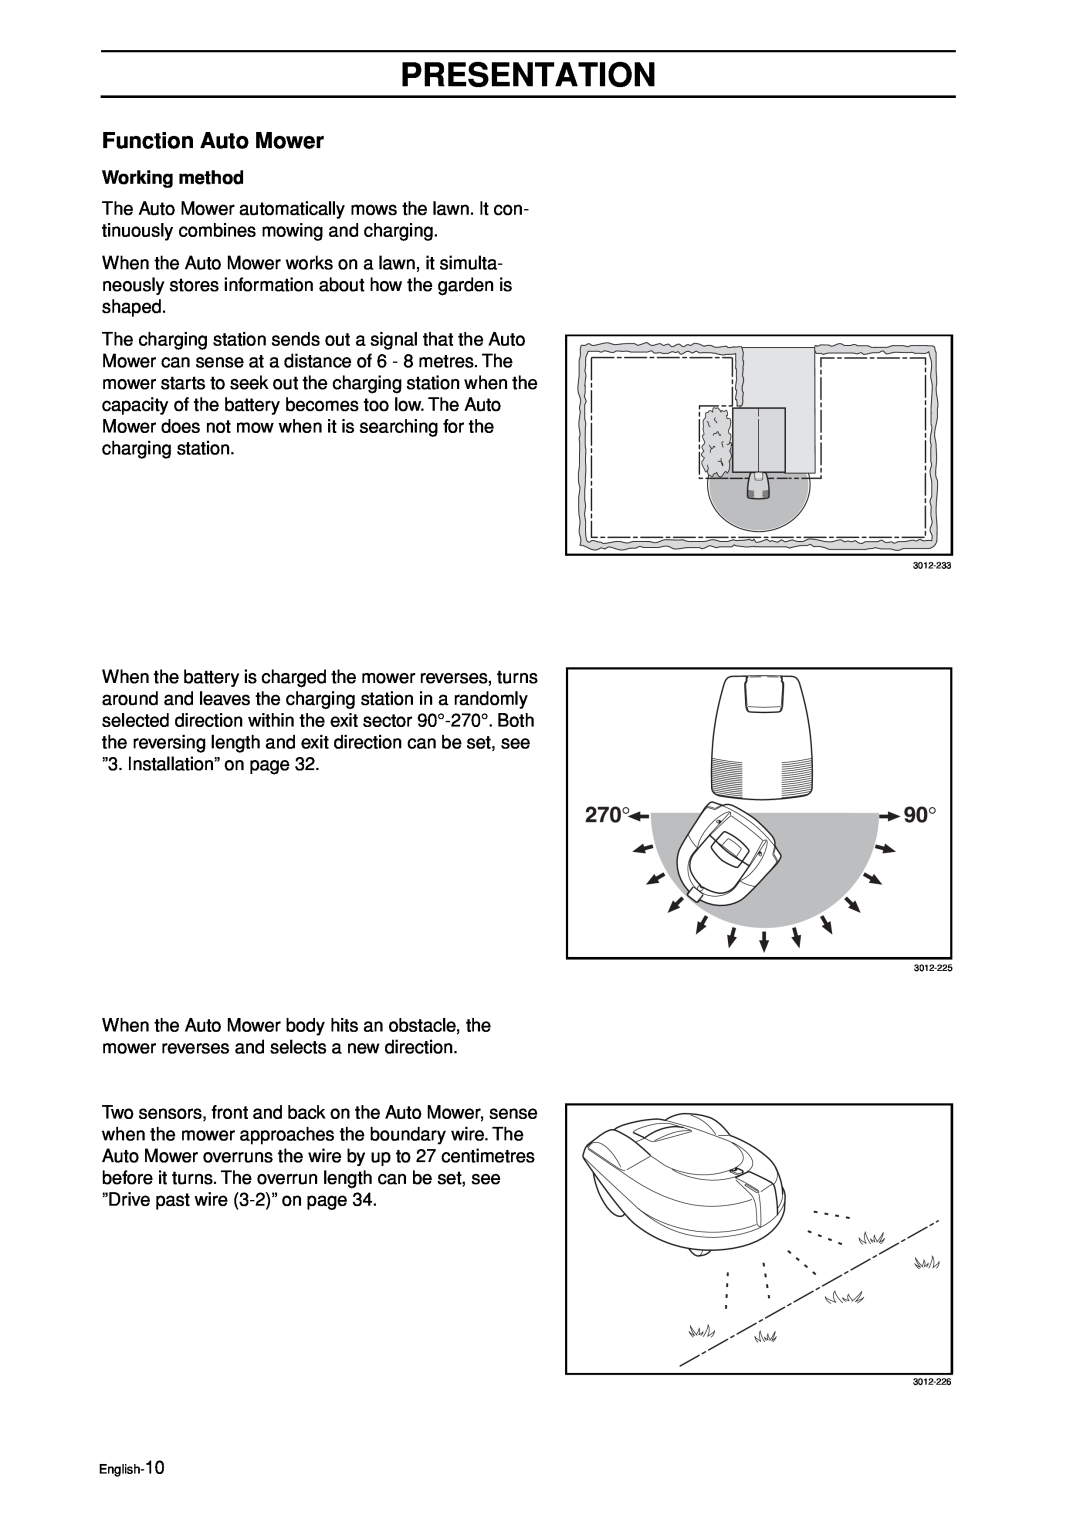 Husqvarna manual Function Auto Mower, Presentation, Working method 